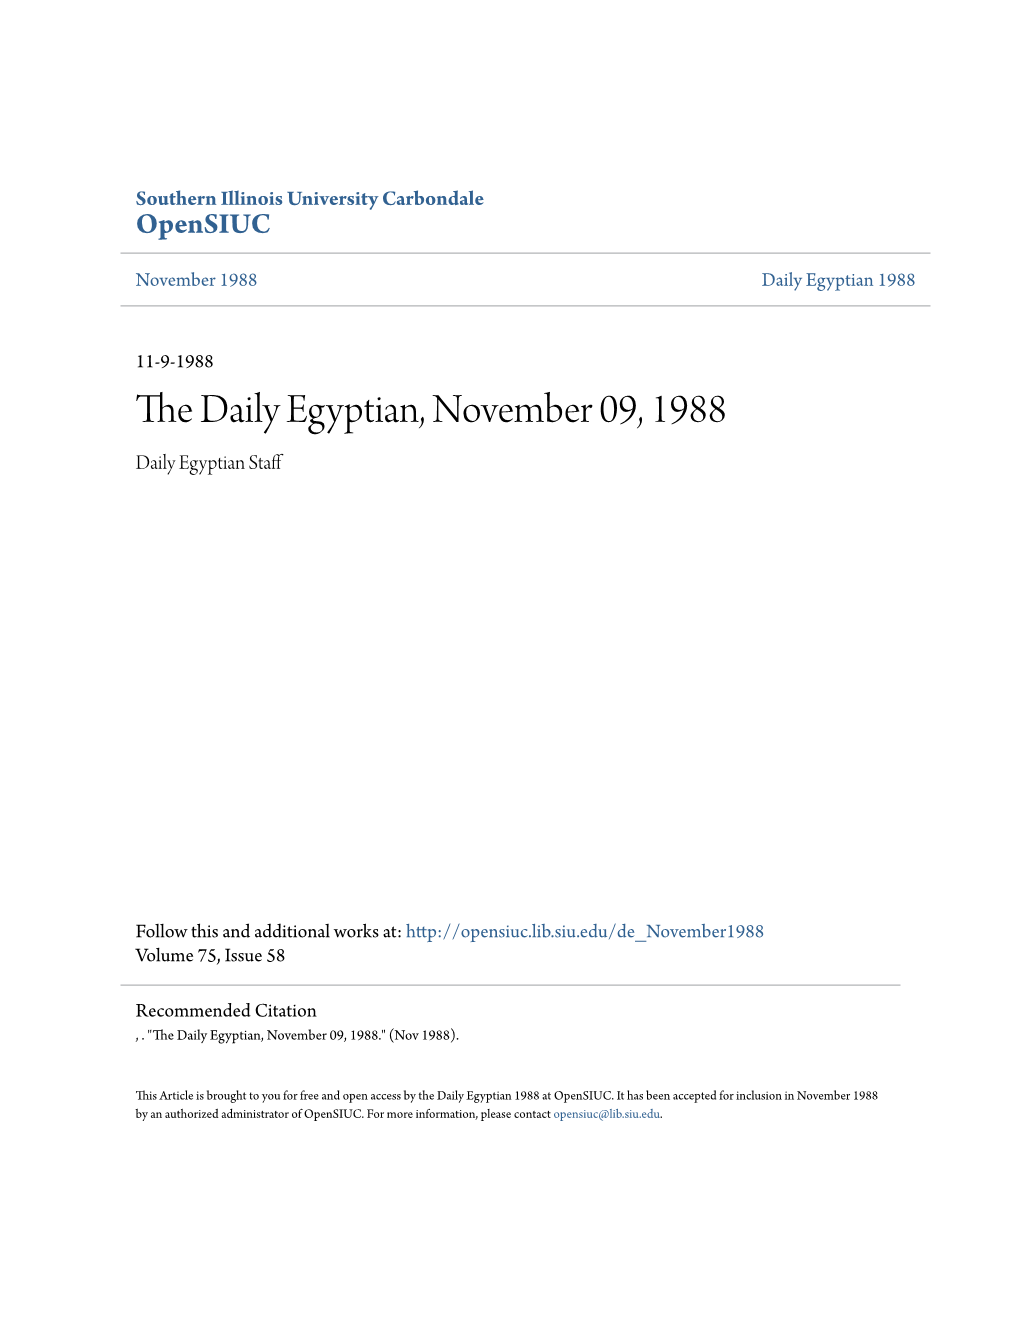 The Daily Egyptian, November 09, 1988